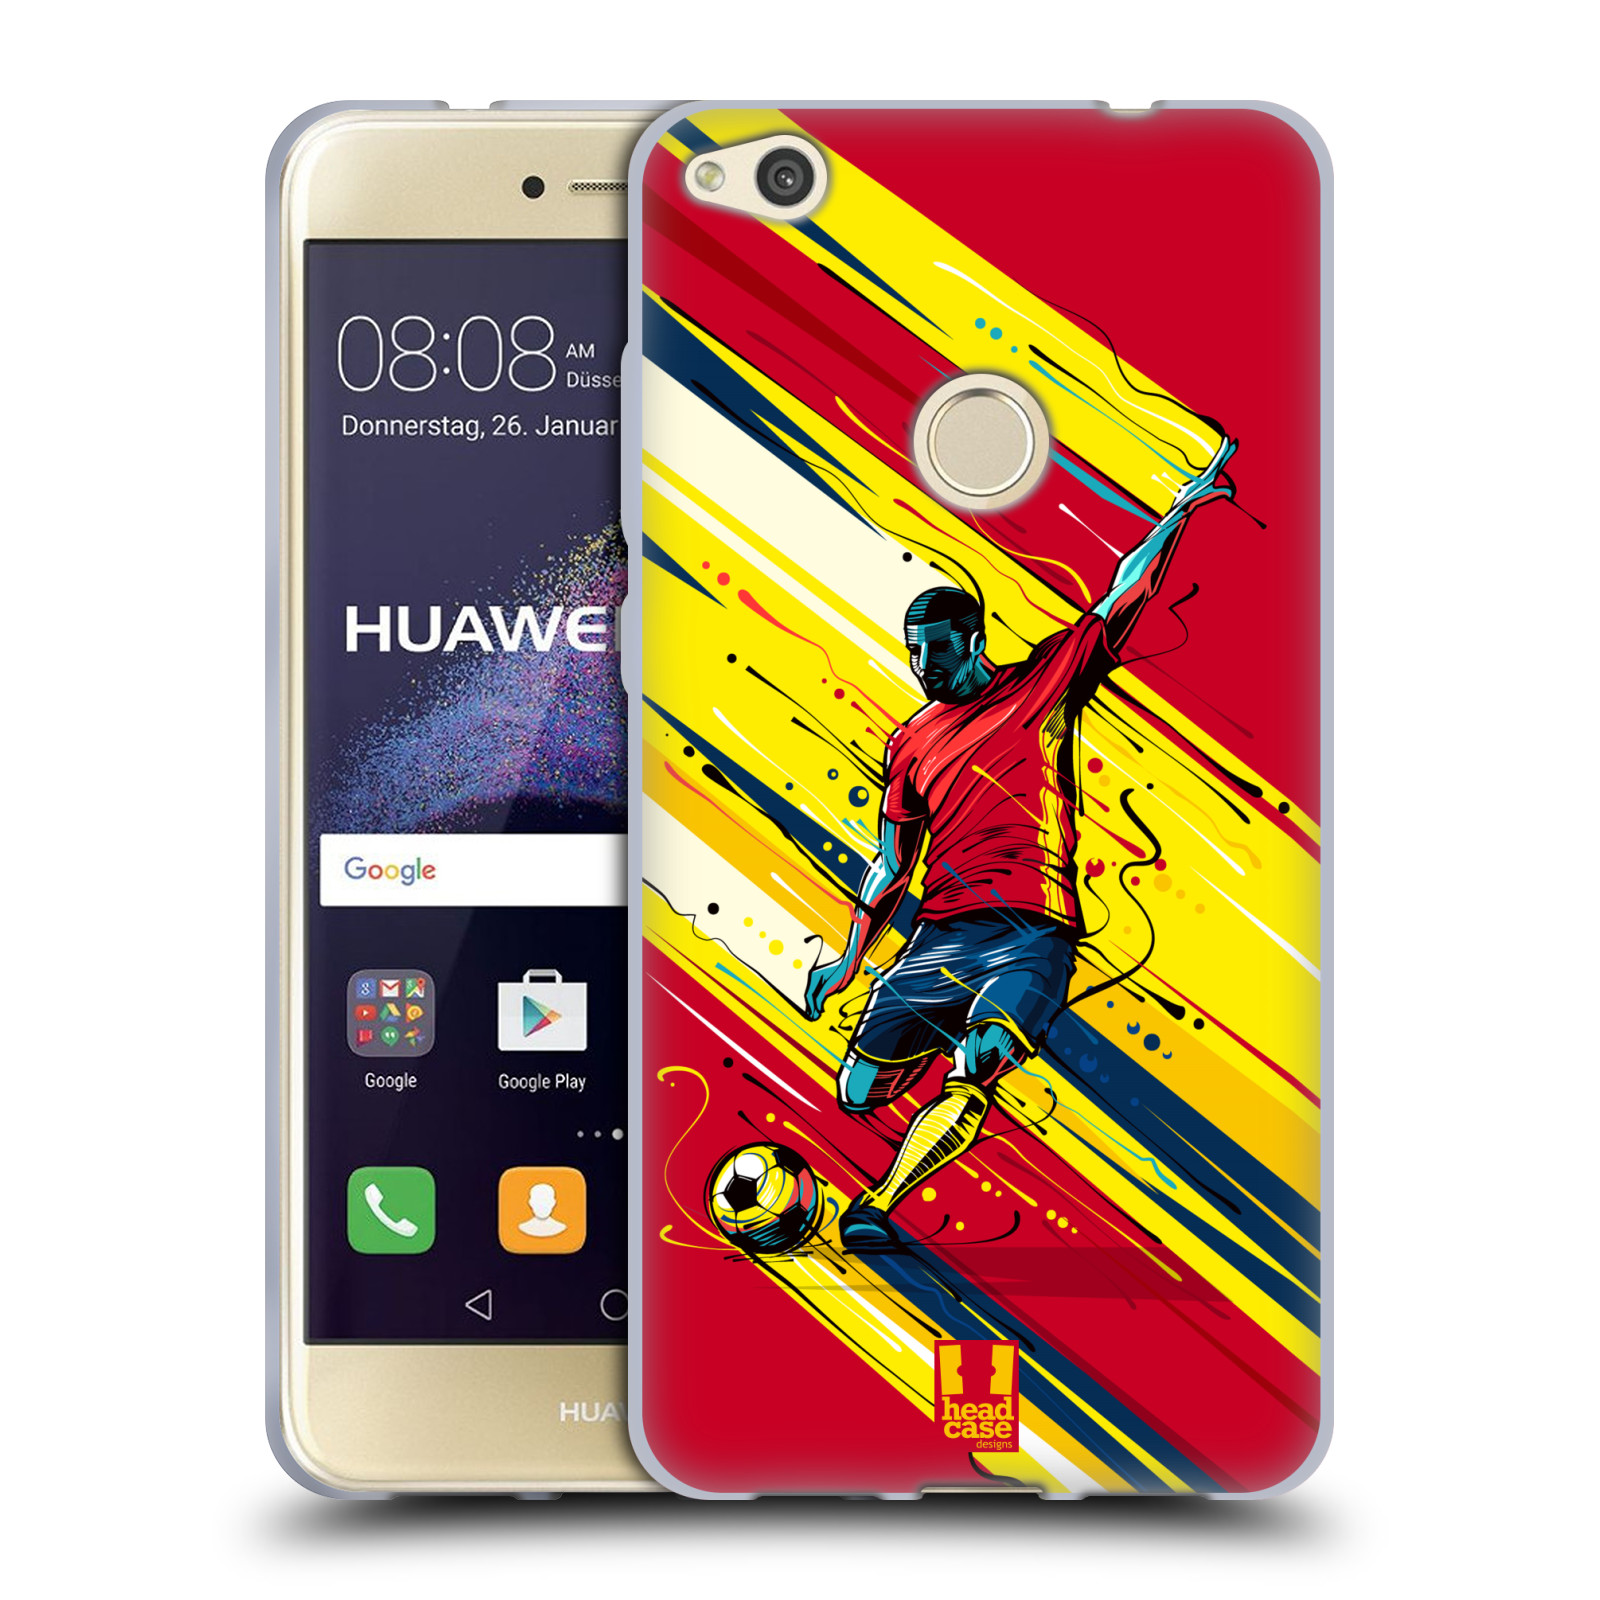 HEAD CASE silikonový obal na mobil Huawei P9 LITE 2017 / P9 LITE 2017 DUAL SIM Sport fotbal střela do brány